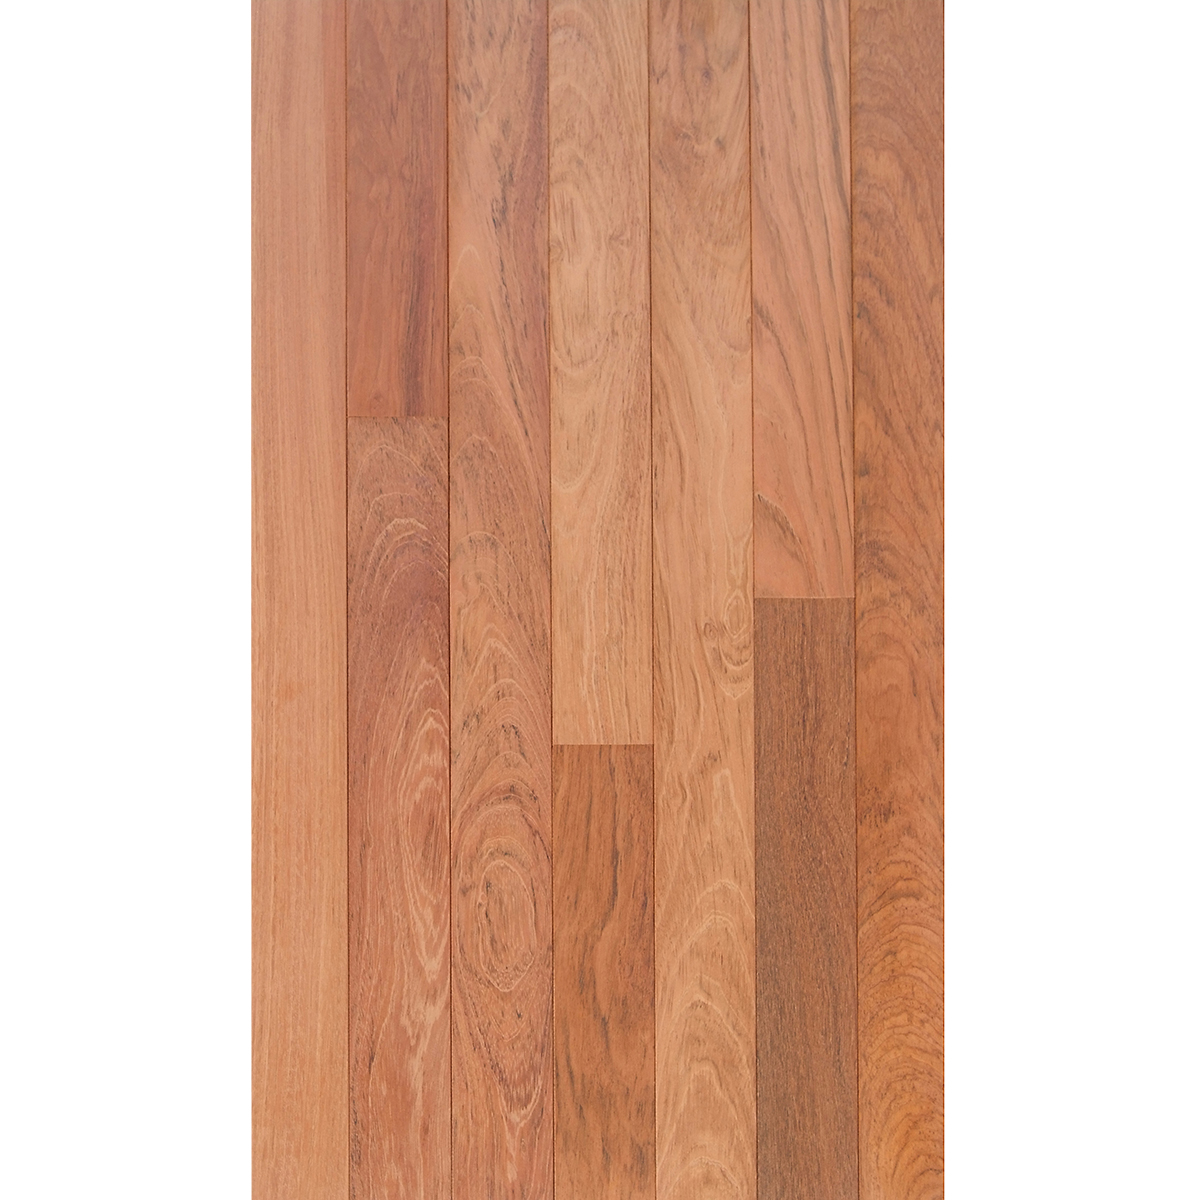 Brazilian Cherry 3 4 X Select Grade, Unfinished Brazilian Cherry Hardwood Flooring